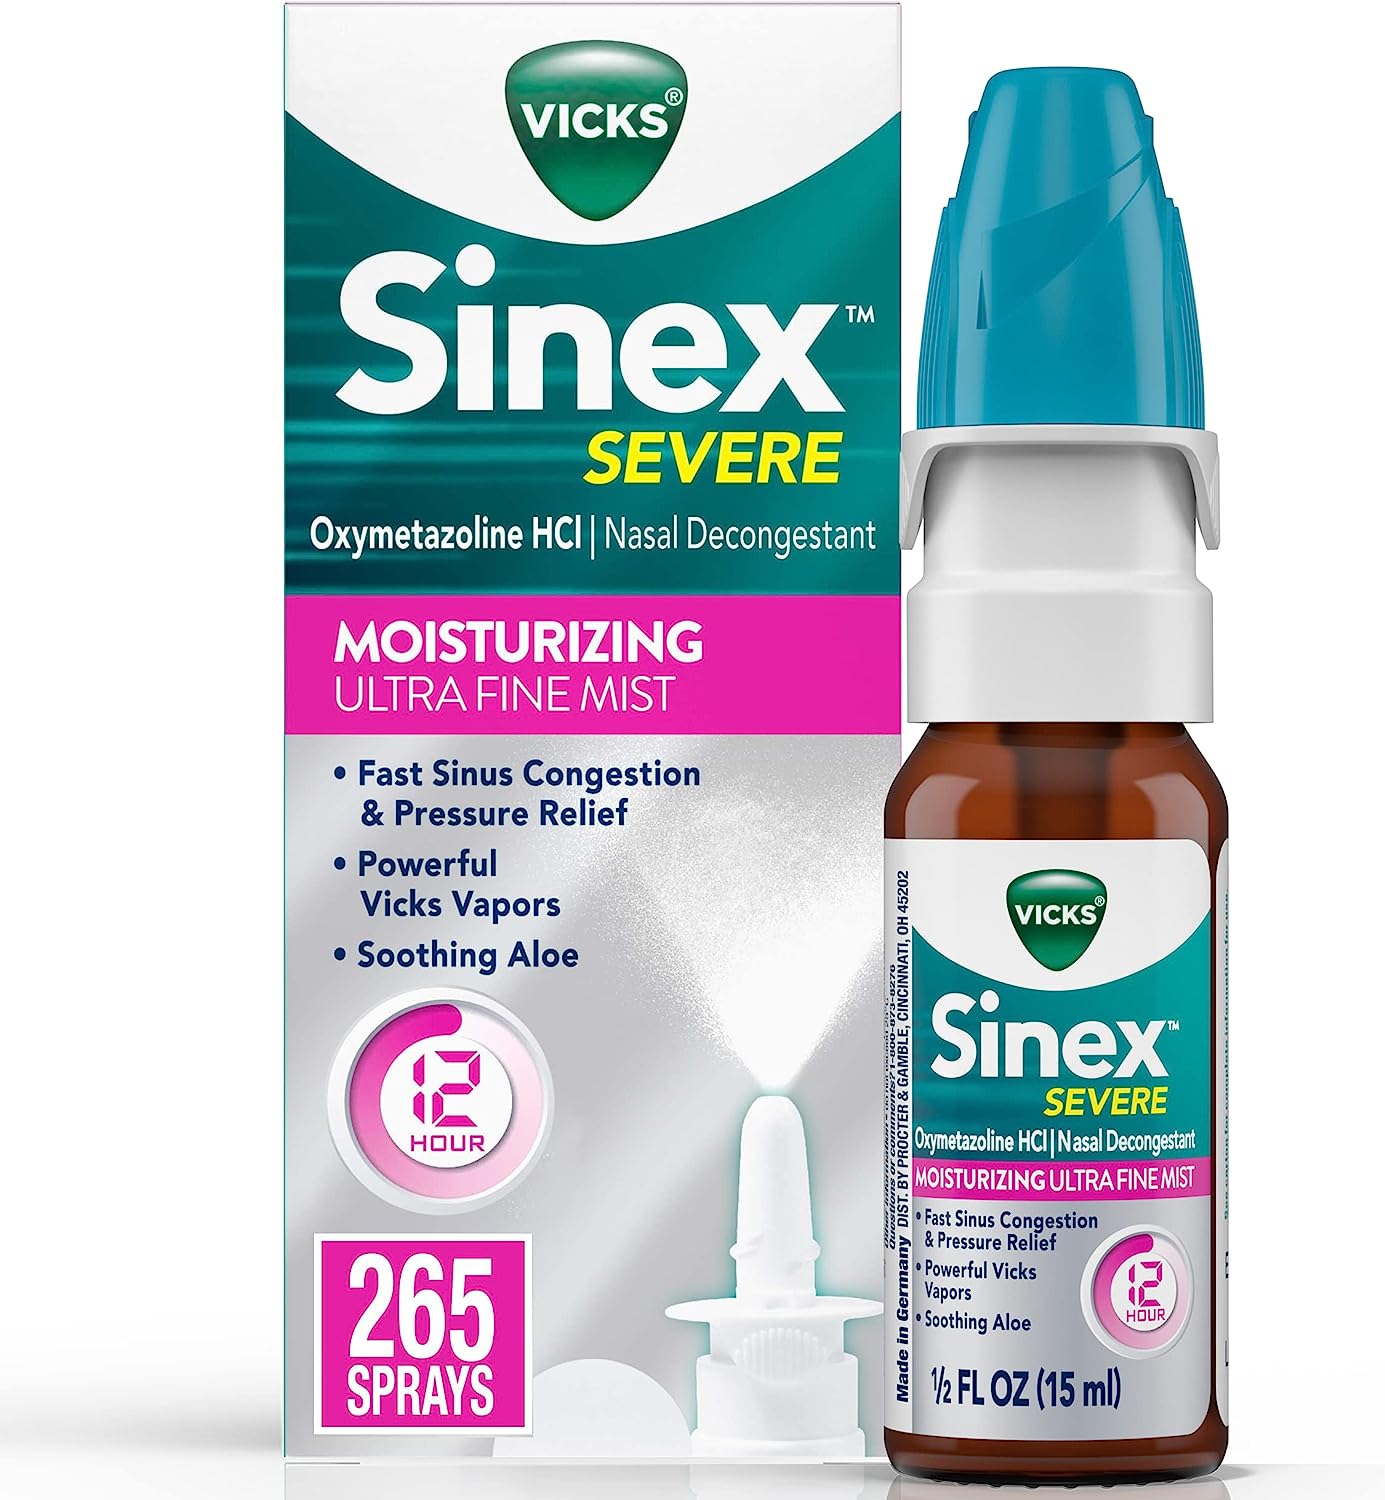 Vicks Sinex Severe Nasal Spray with Moisturizing Ultra Fine Mist, Decongestant for Stuffy Nose Relief from Cold, Allergy, Sinus Pressure - 265 Sprays